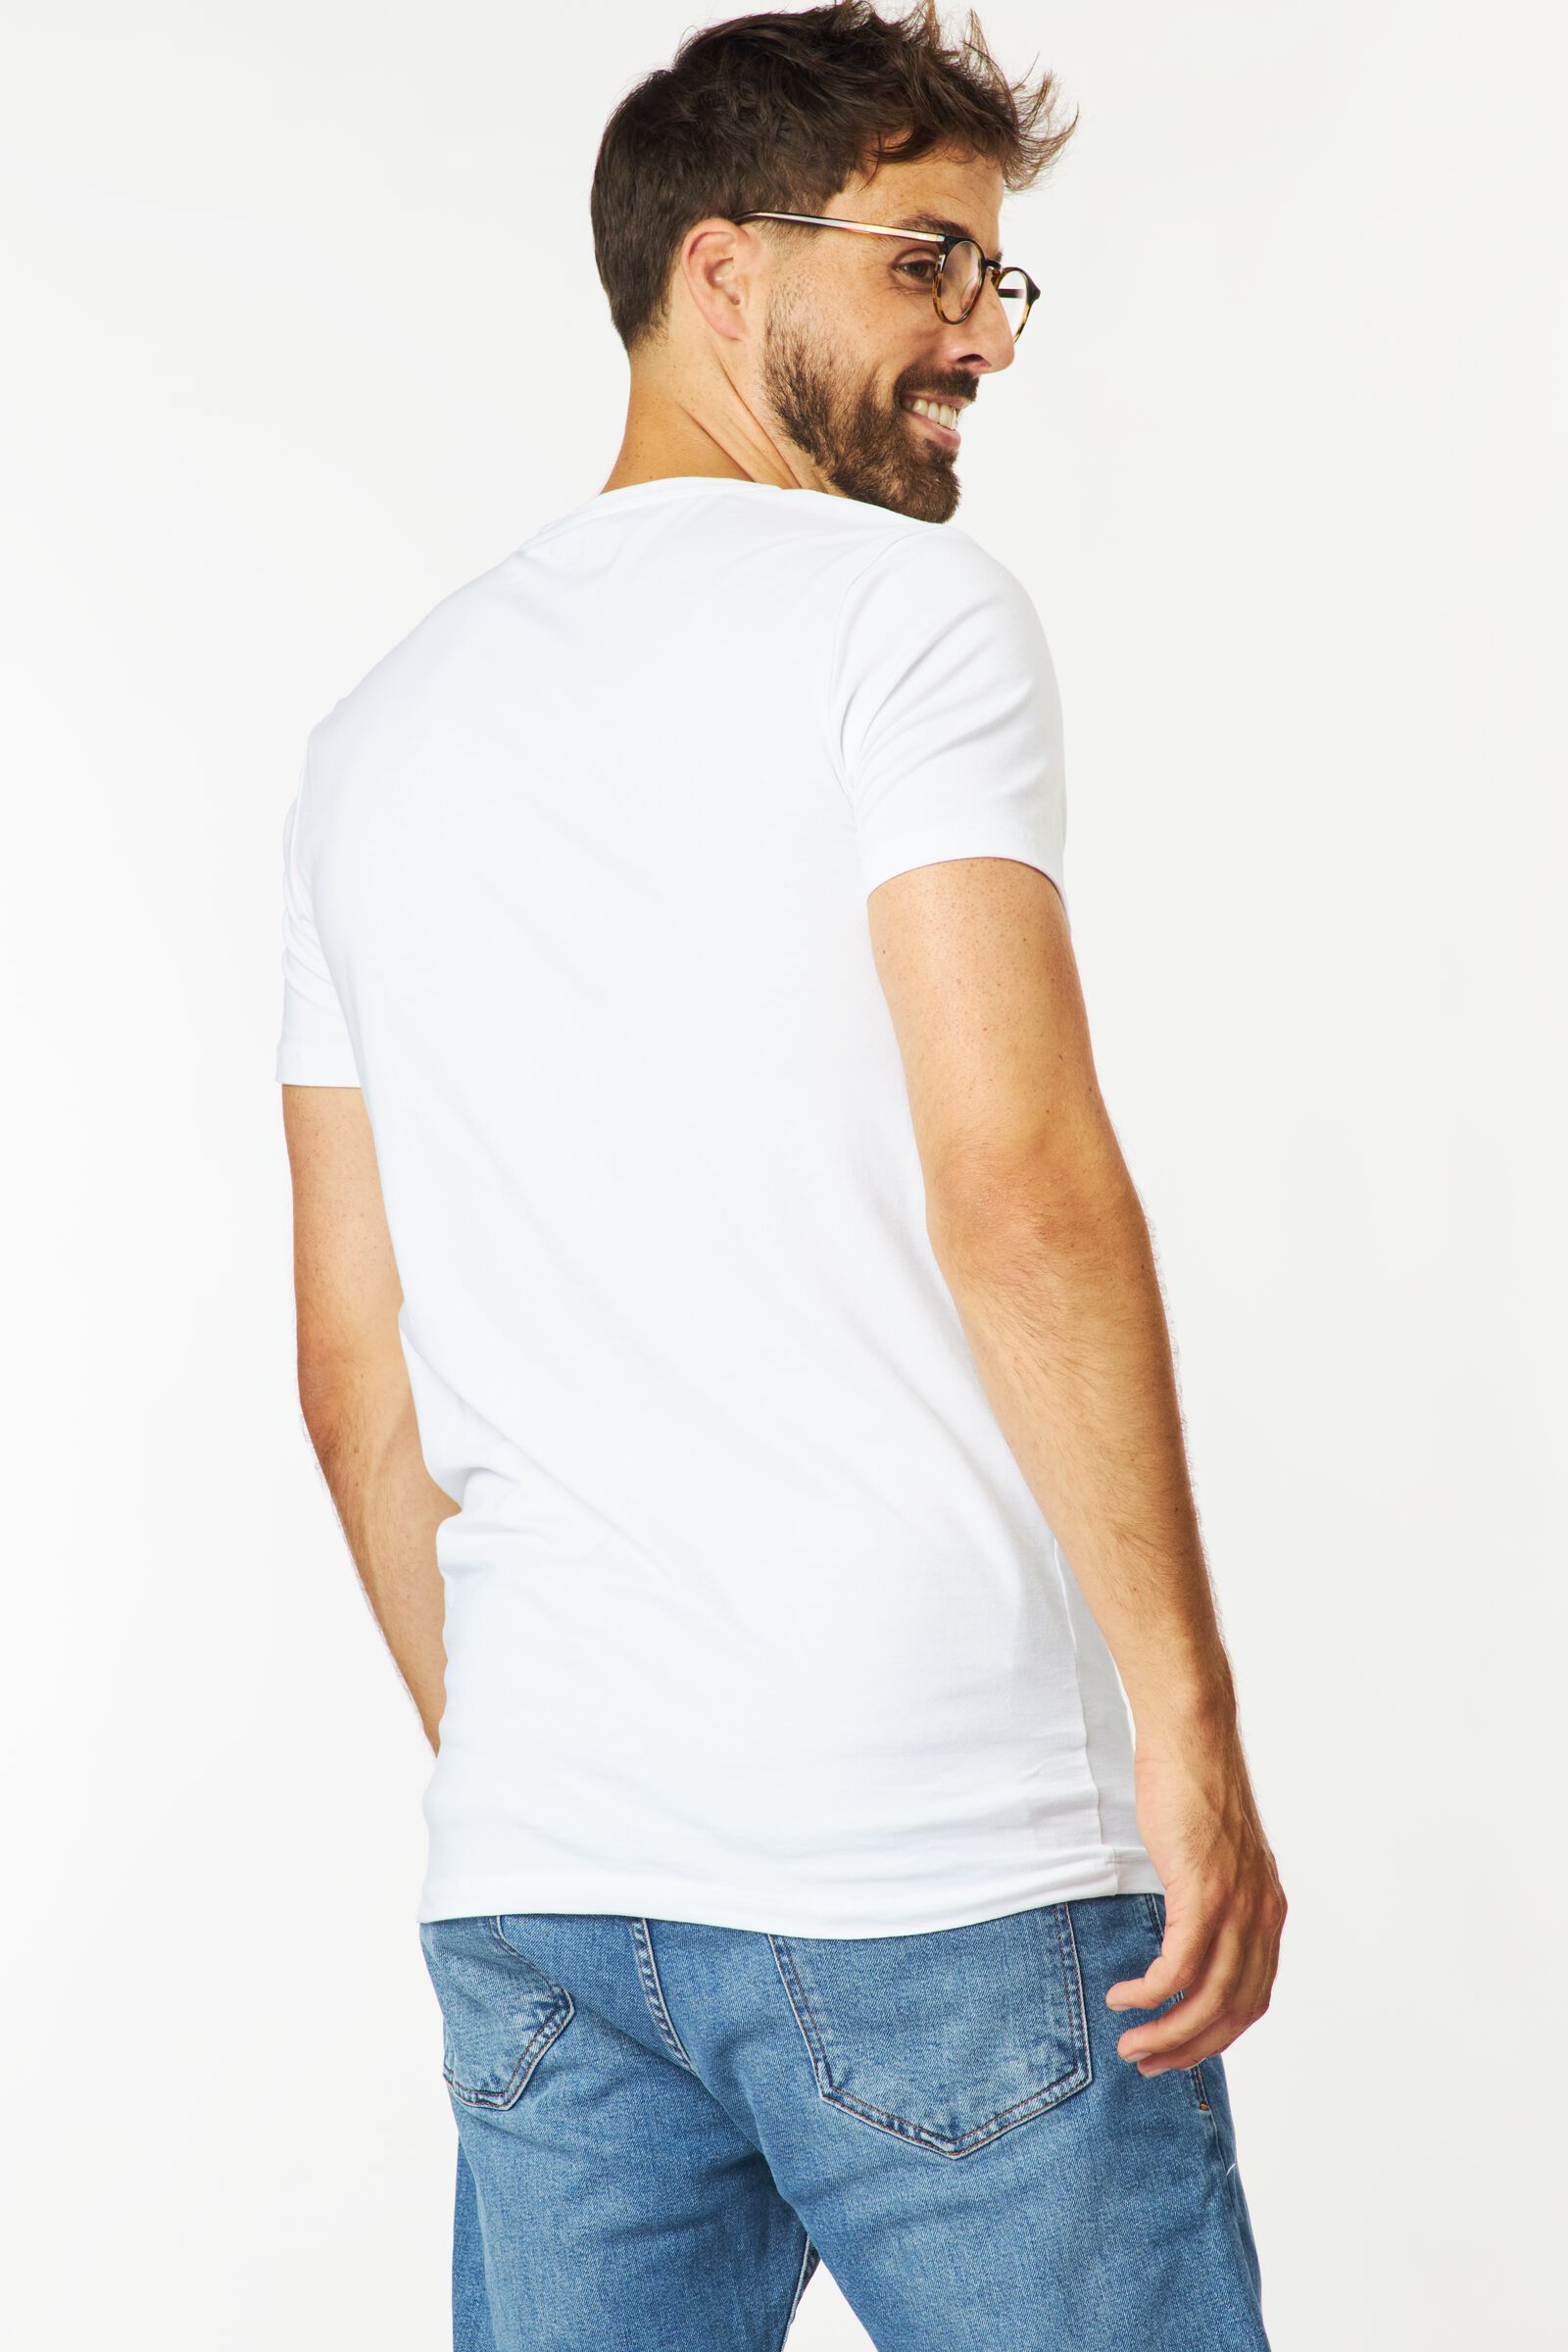 t-shirt homme slim fit col en v - extra long blanc M - 34276864 - HEMA